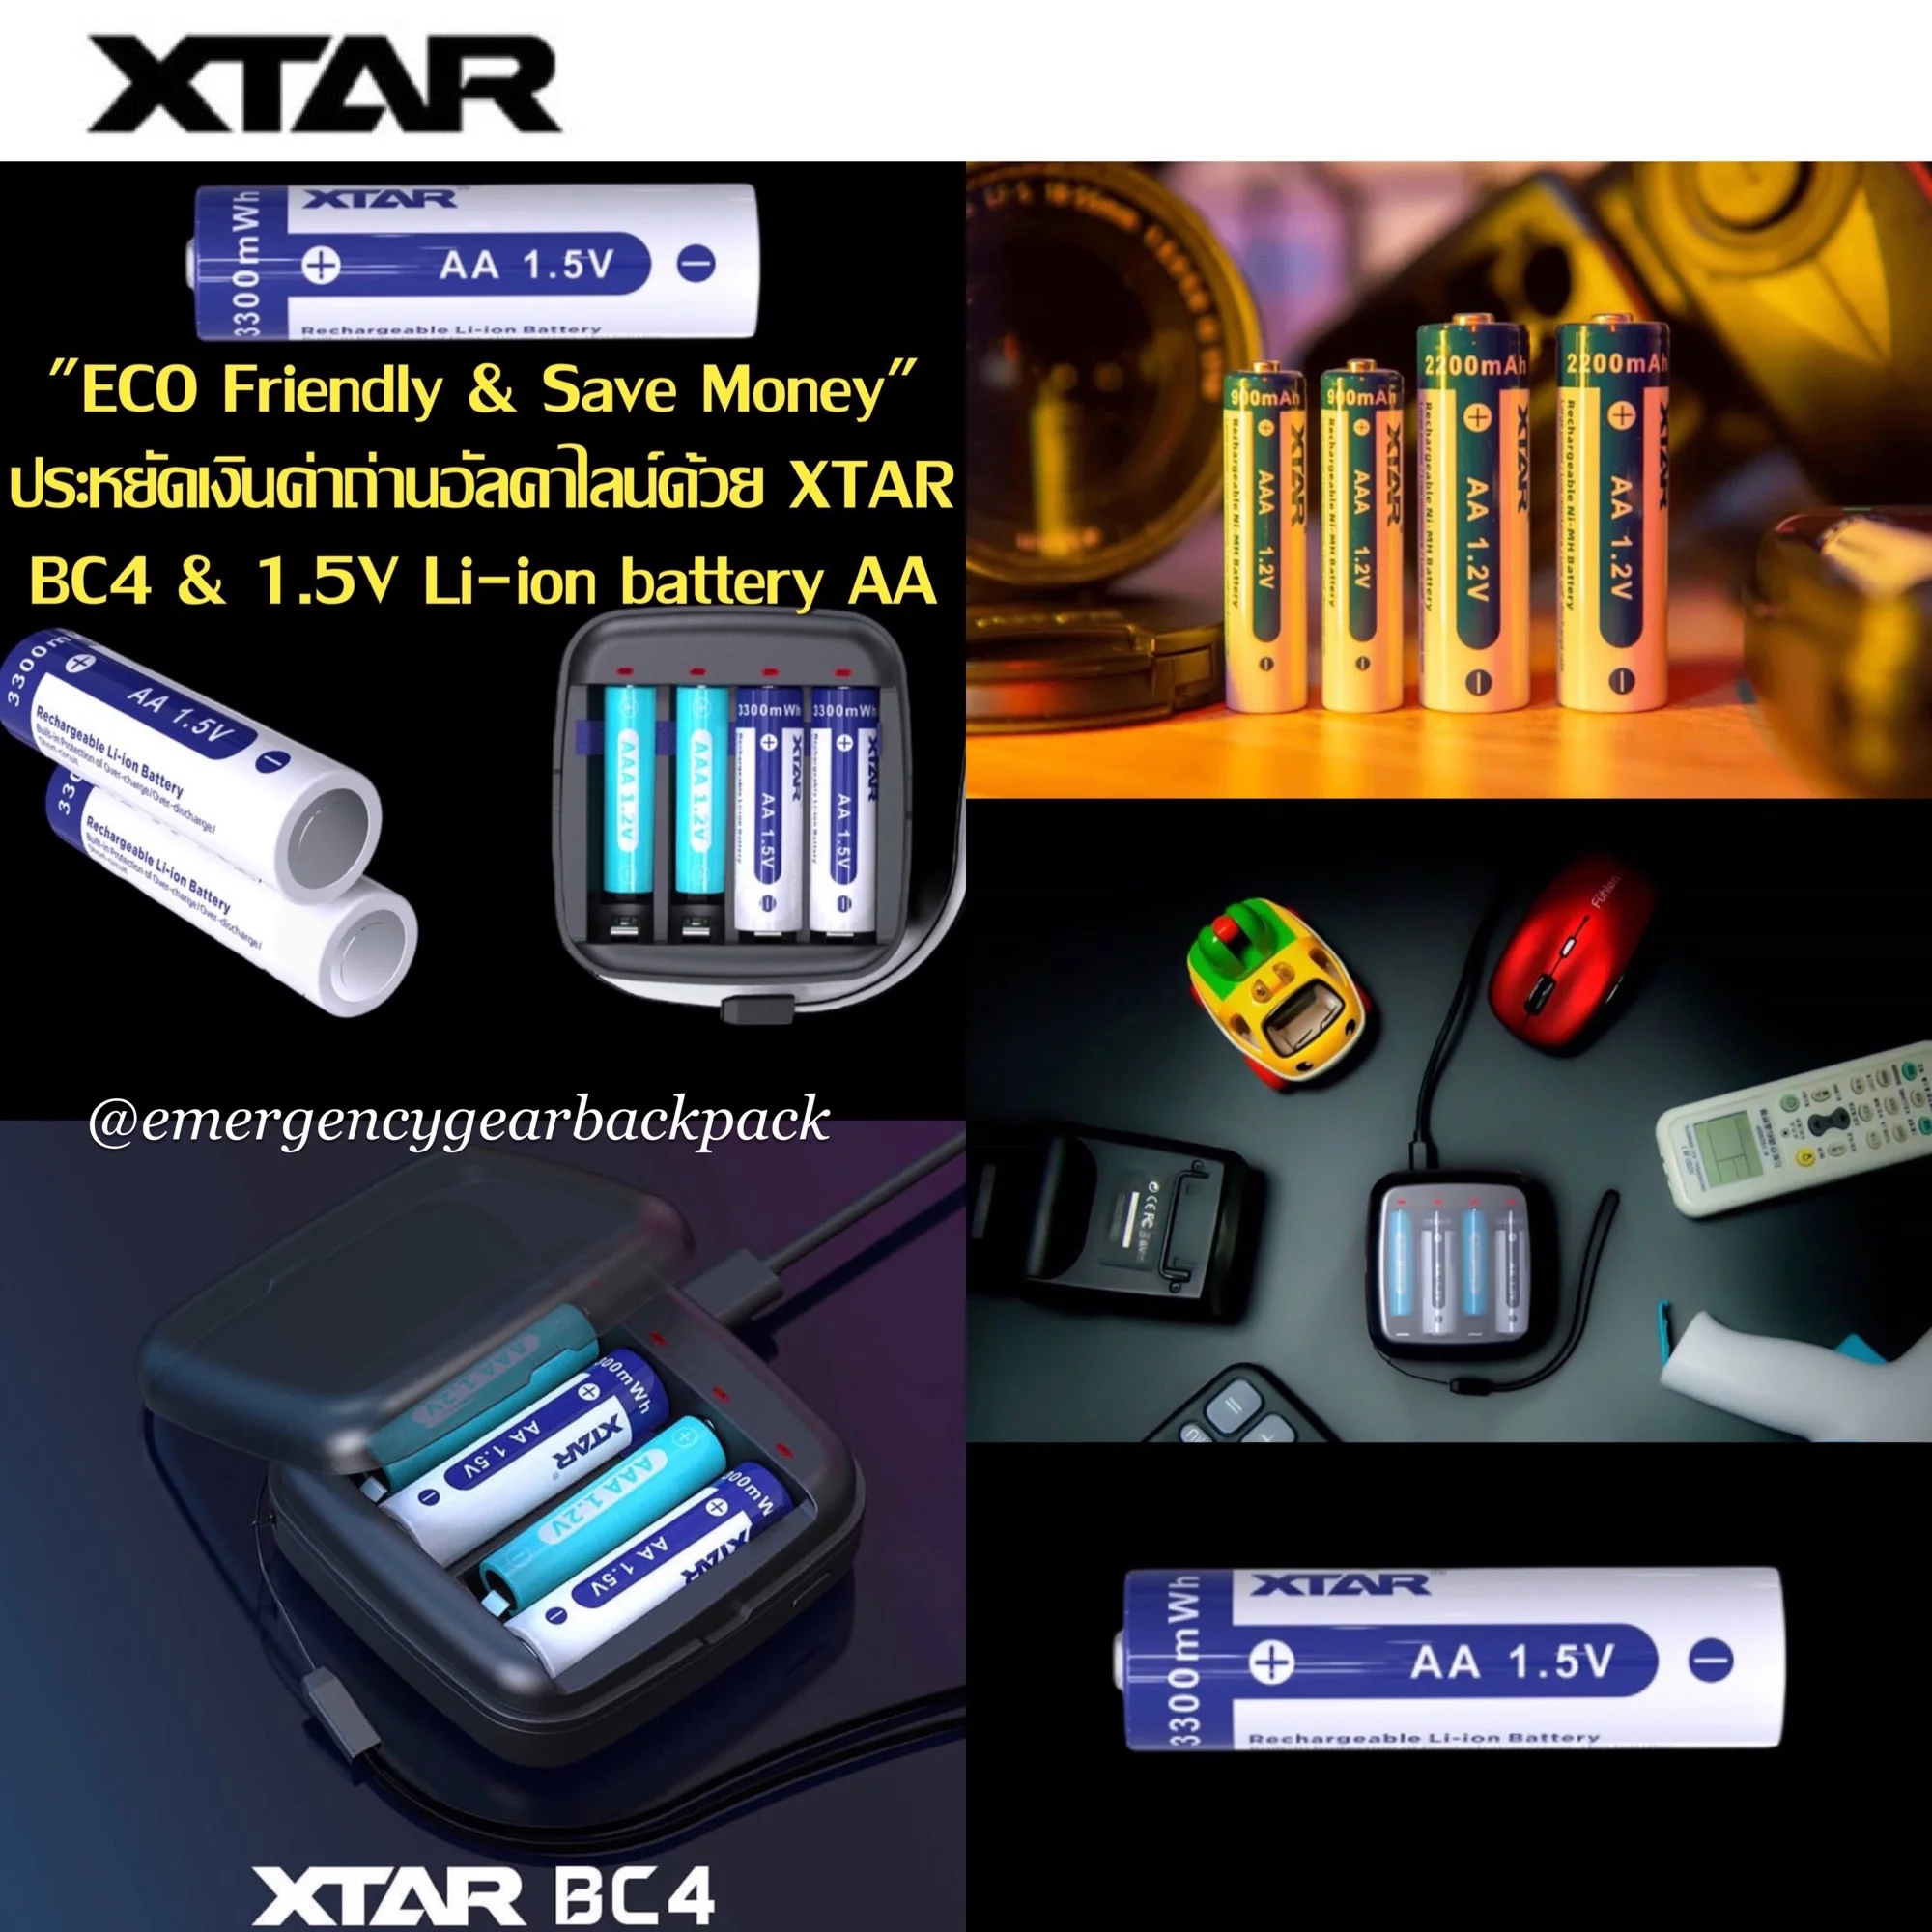 Promotion Set: XTAR BC4 Charger & XTAR 1.5V Li-ion Battery AA x 4 ก้อน